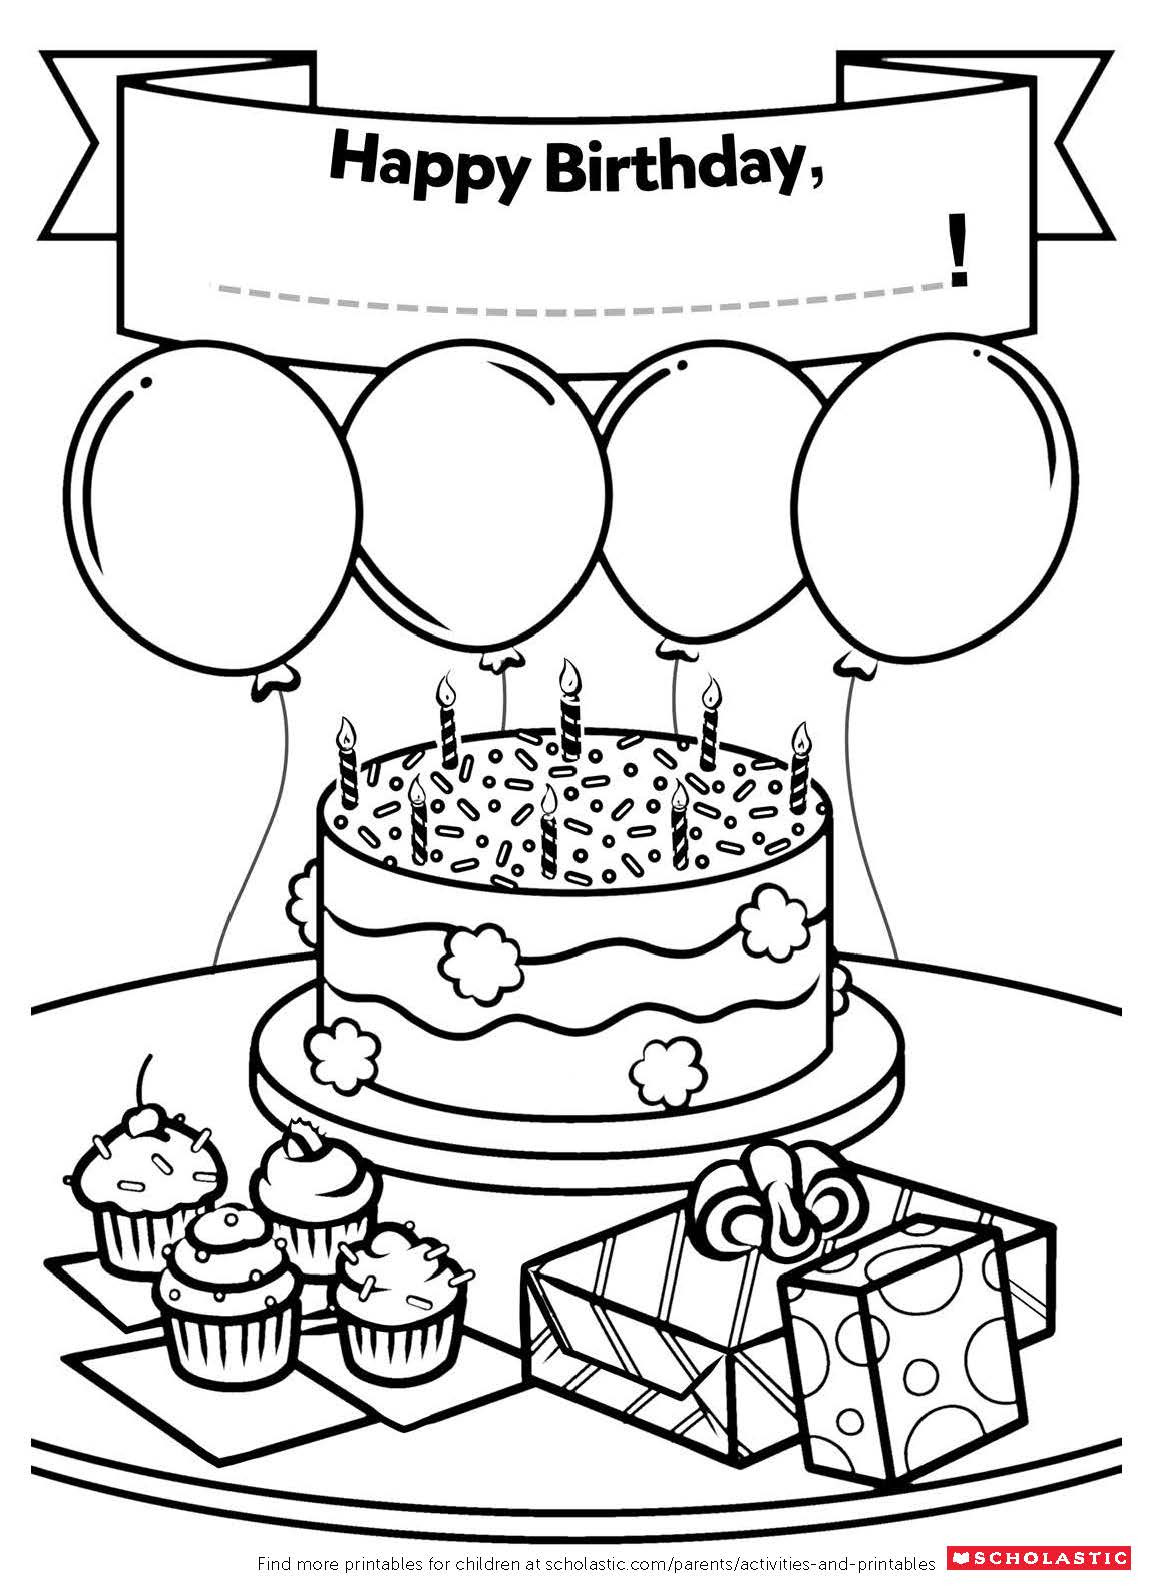 Free Printable Birthday Cards For Kids
 A Homemade Birthday Card